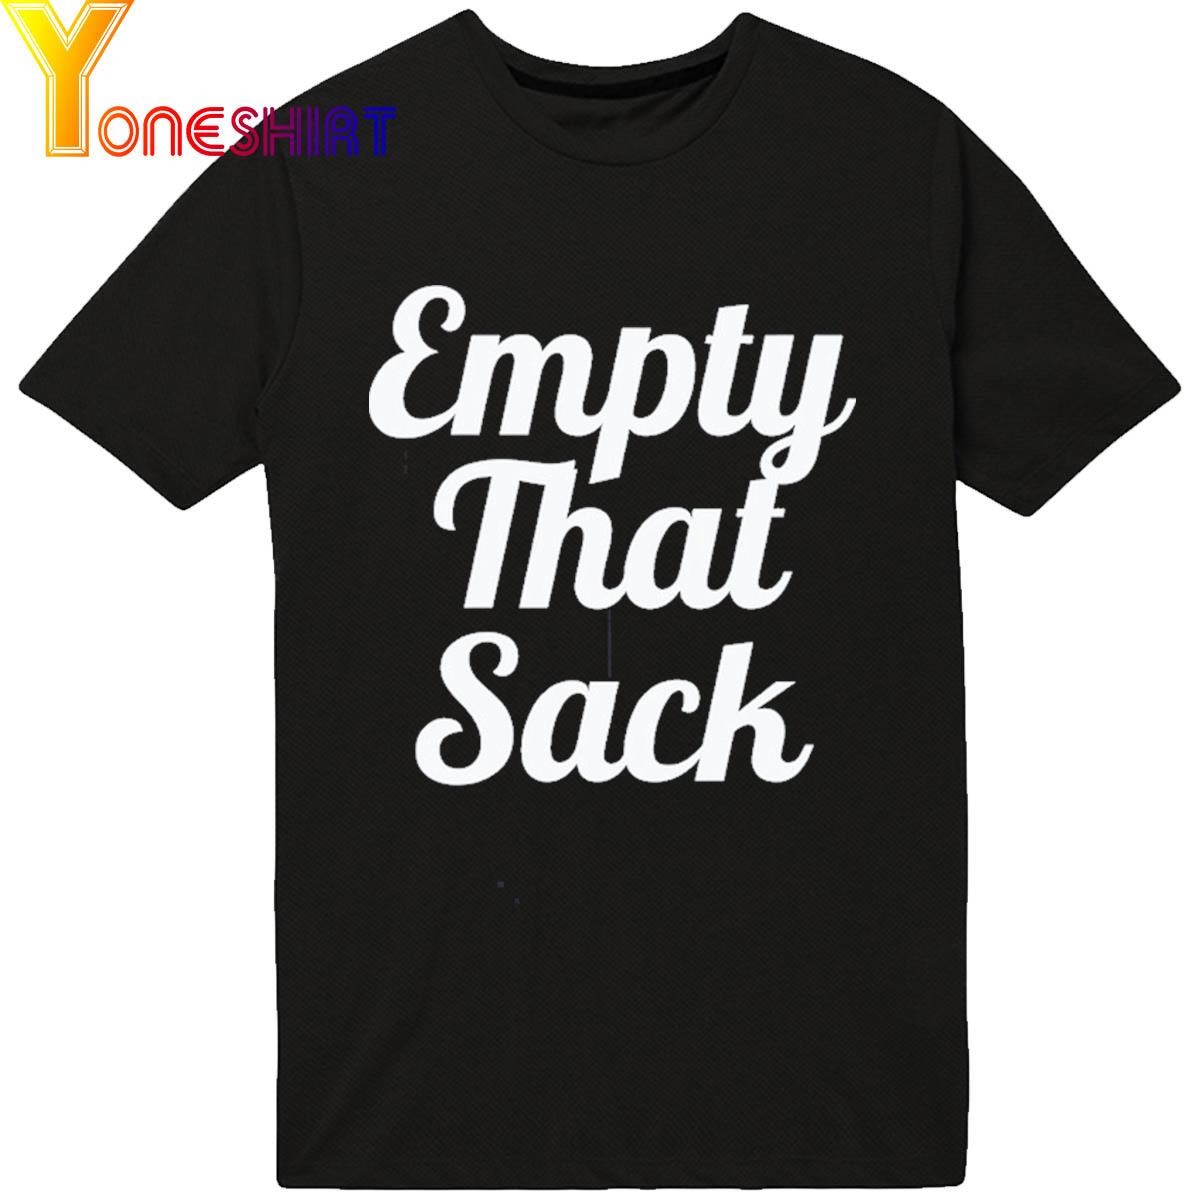 Empty That Sack shirt